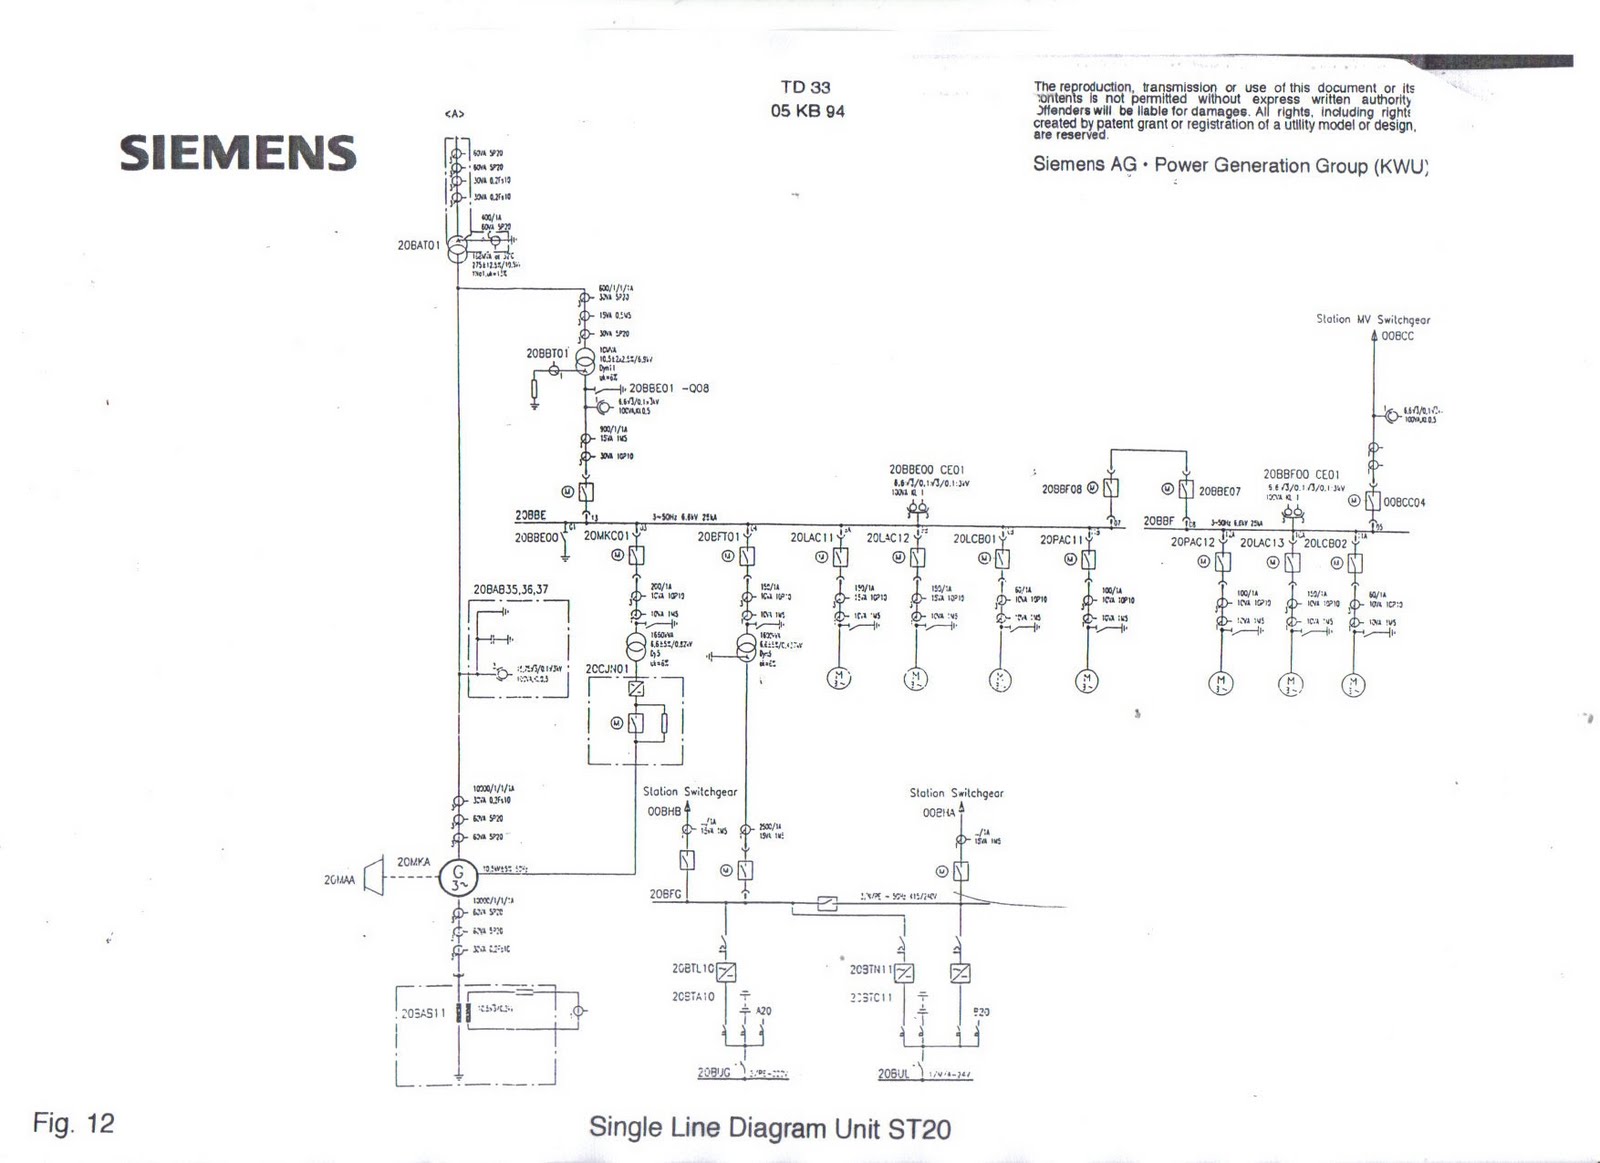  Emergency Power System Diagrams. on single line diagram power plant